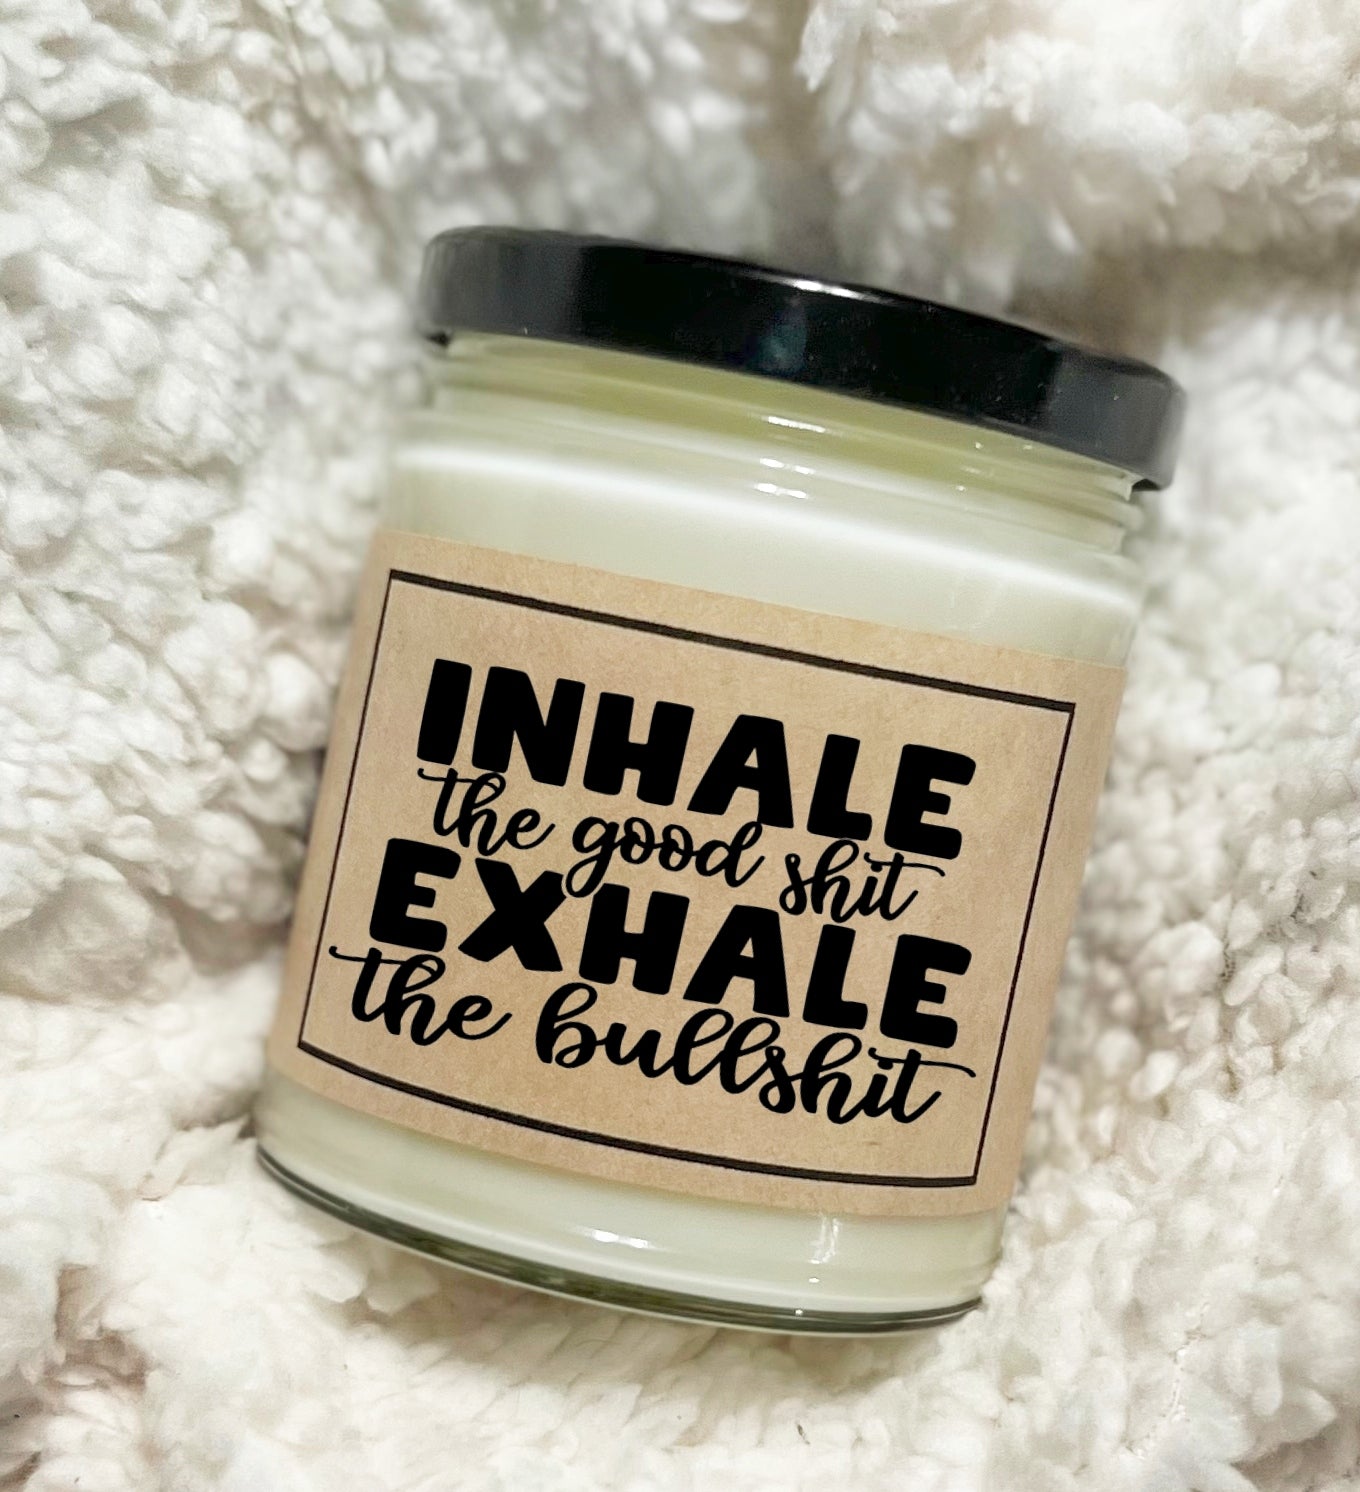 Inhale The Good Shit Exhale The Bullshit - Custom Candle